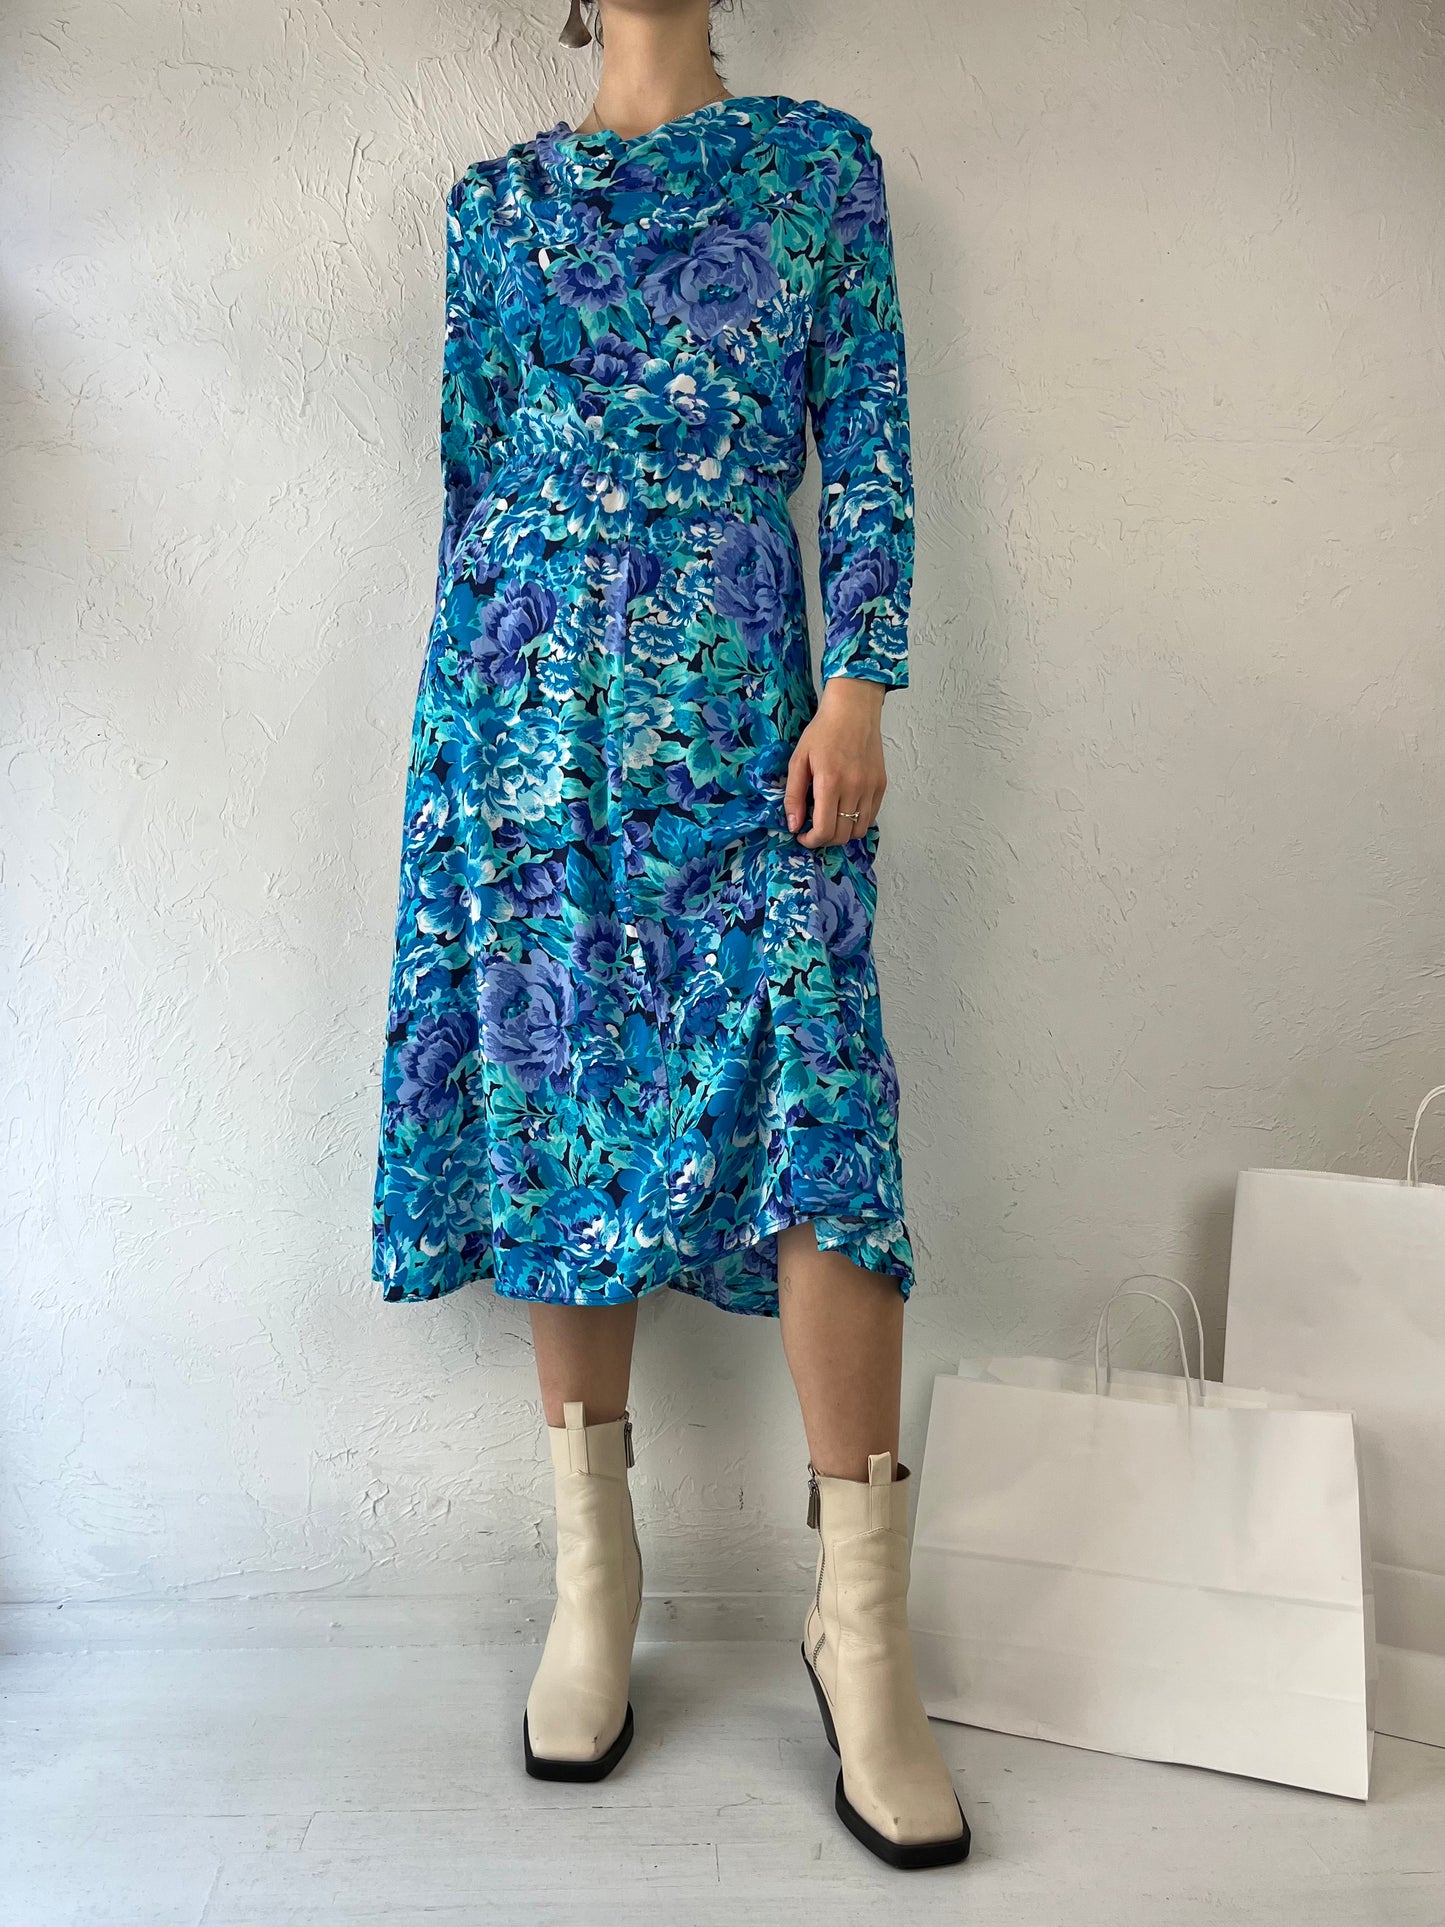 90s 'Mariposa' Blue Floral Print Rayon Dress / Small